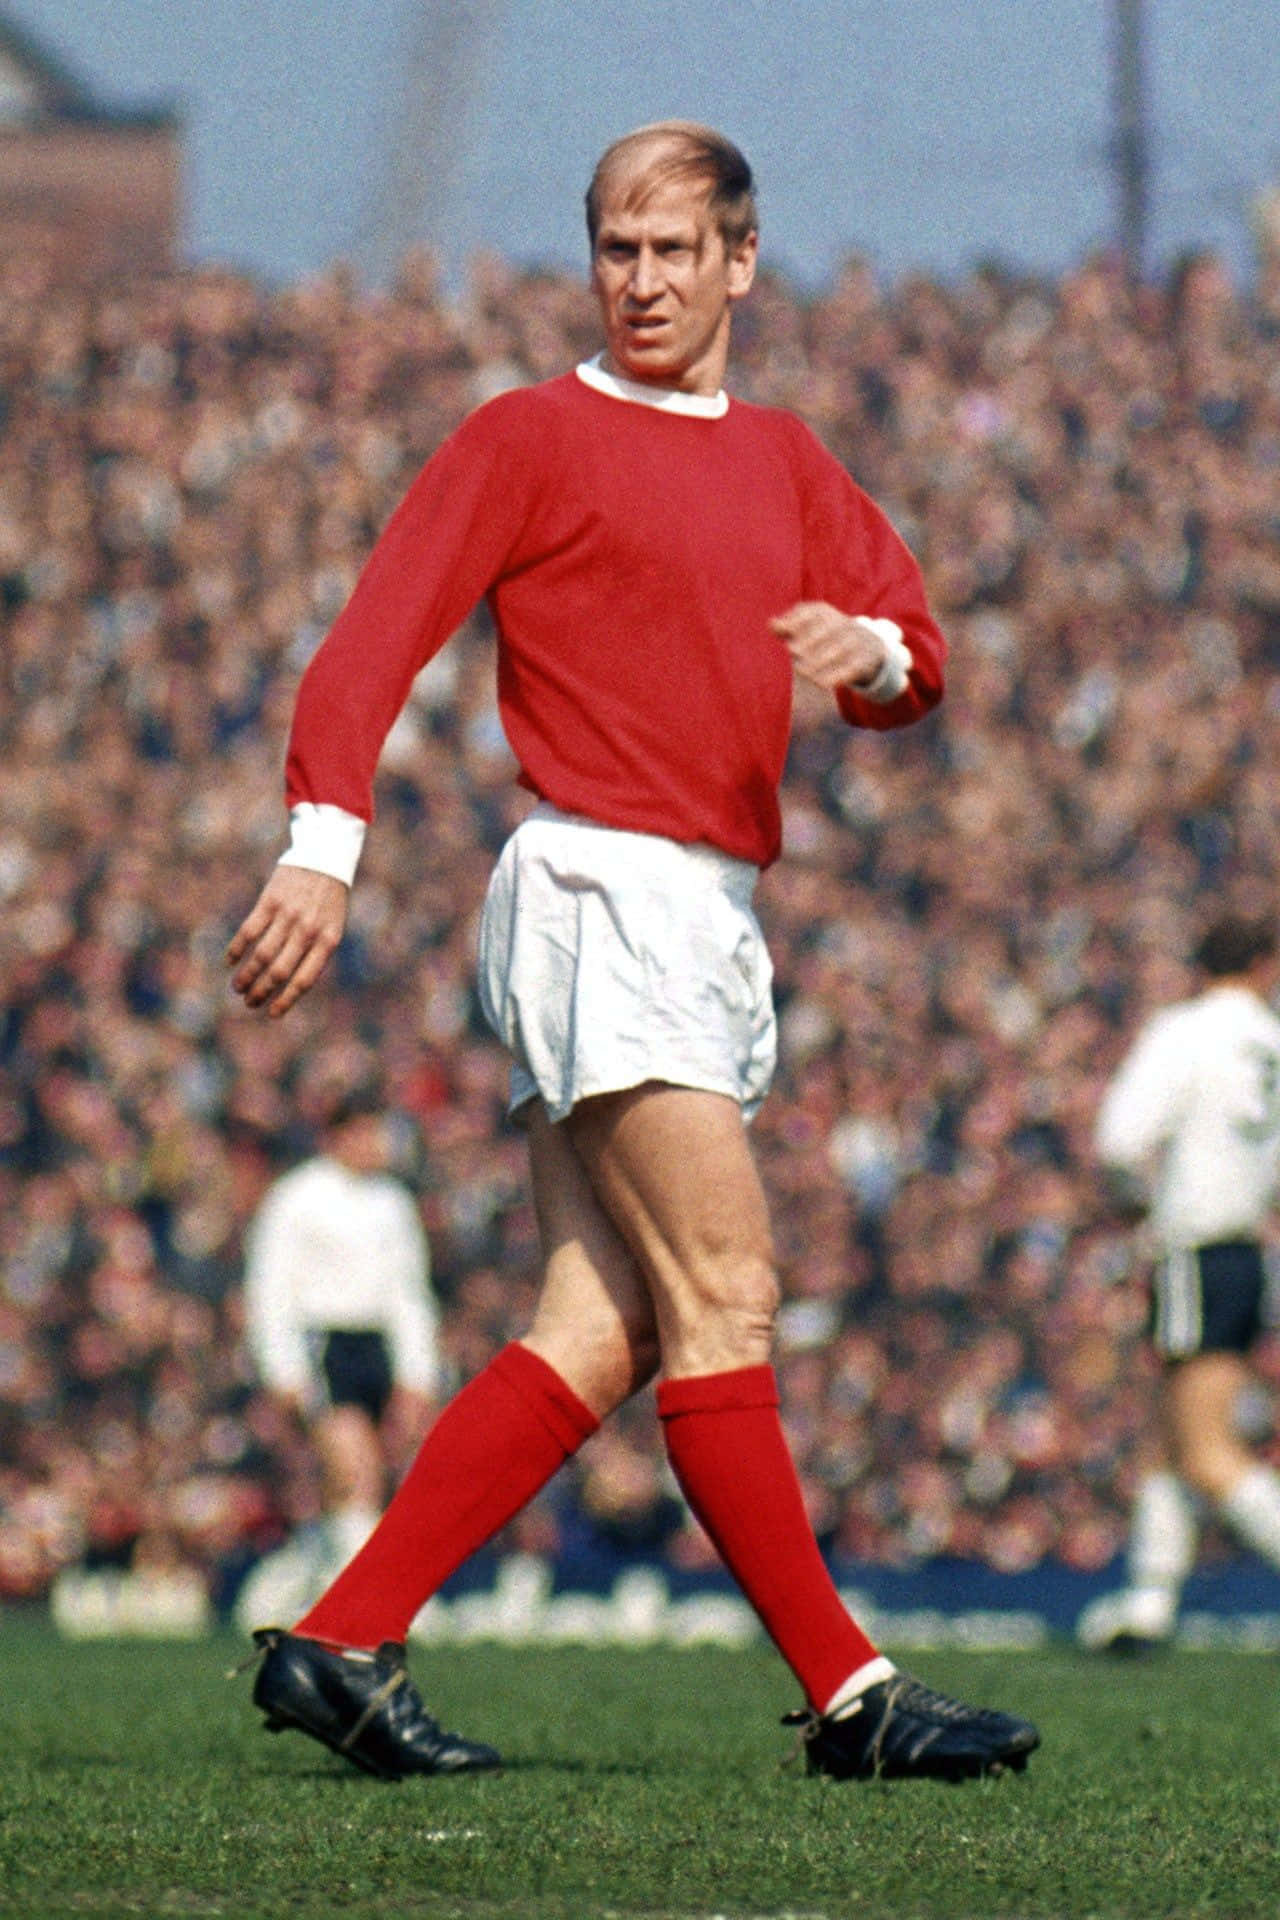 Bobbycharlton 1968 Fotografi Av Fotboll – Bobby Charlton 1968 Football Photography Wallpaper